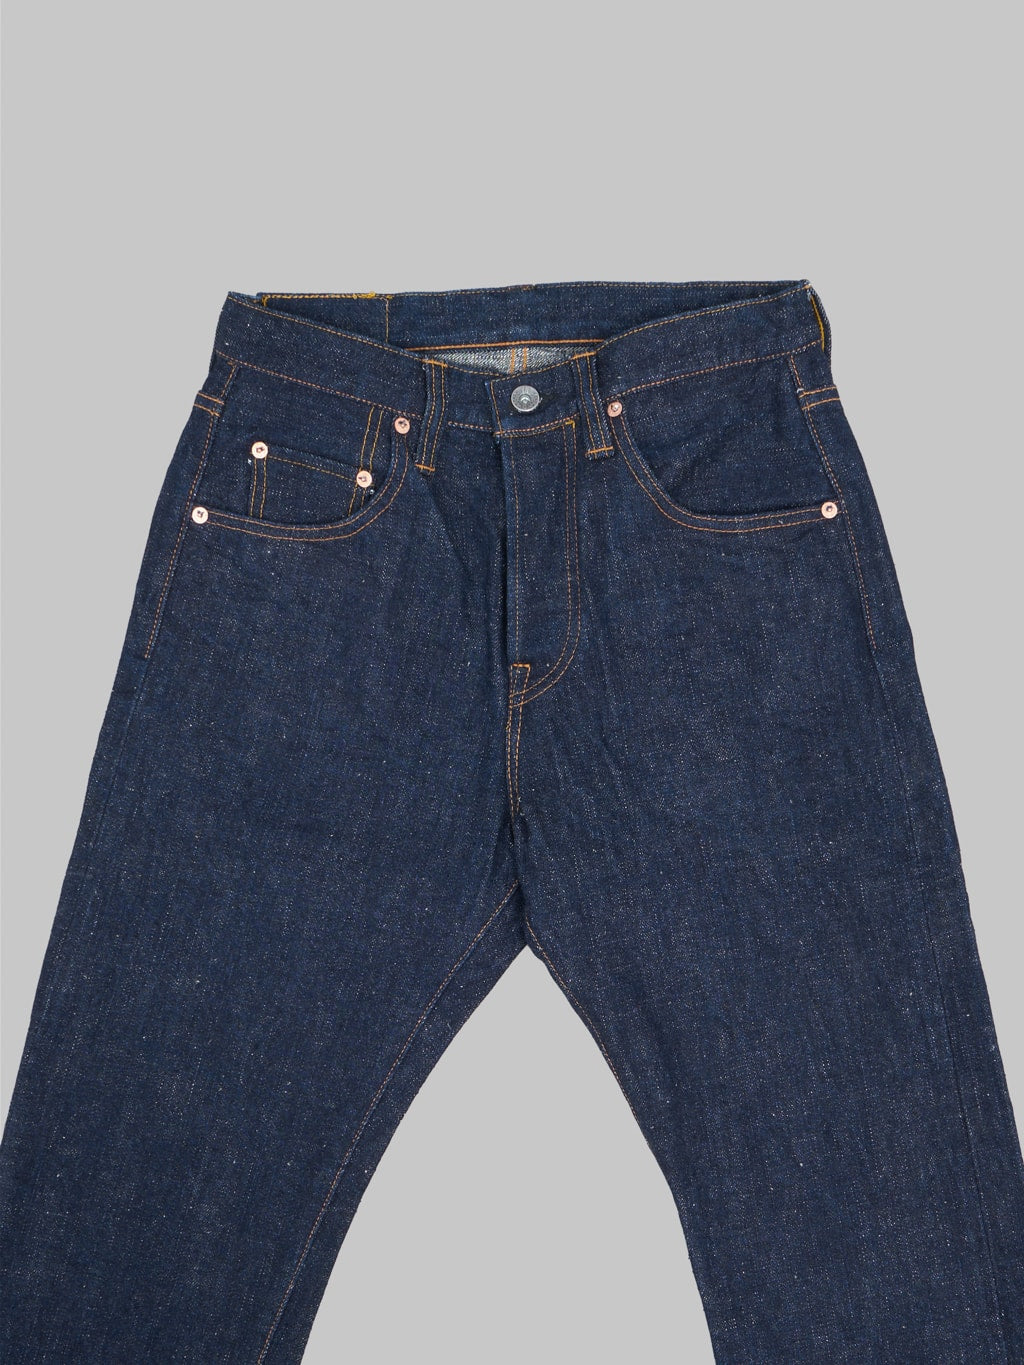 samurai jeans s211ax ai benkei natural indigo 18oz relaxed tapered jeans waist